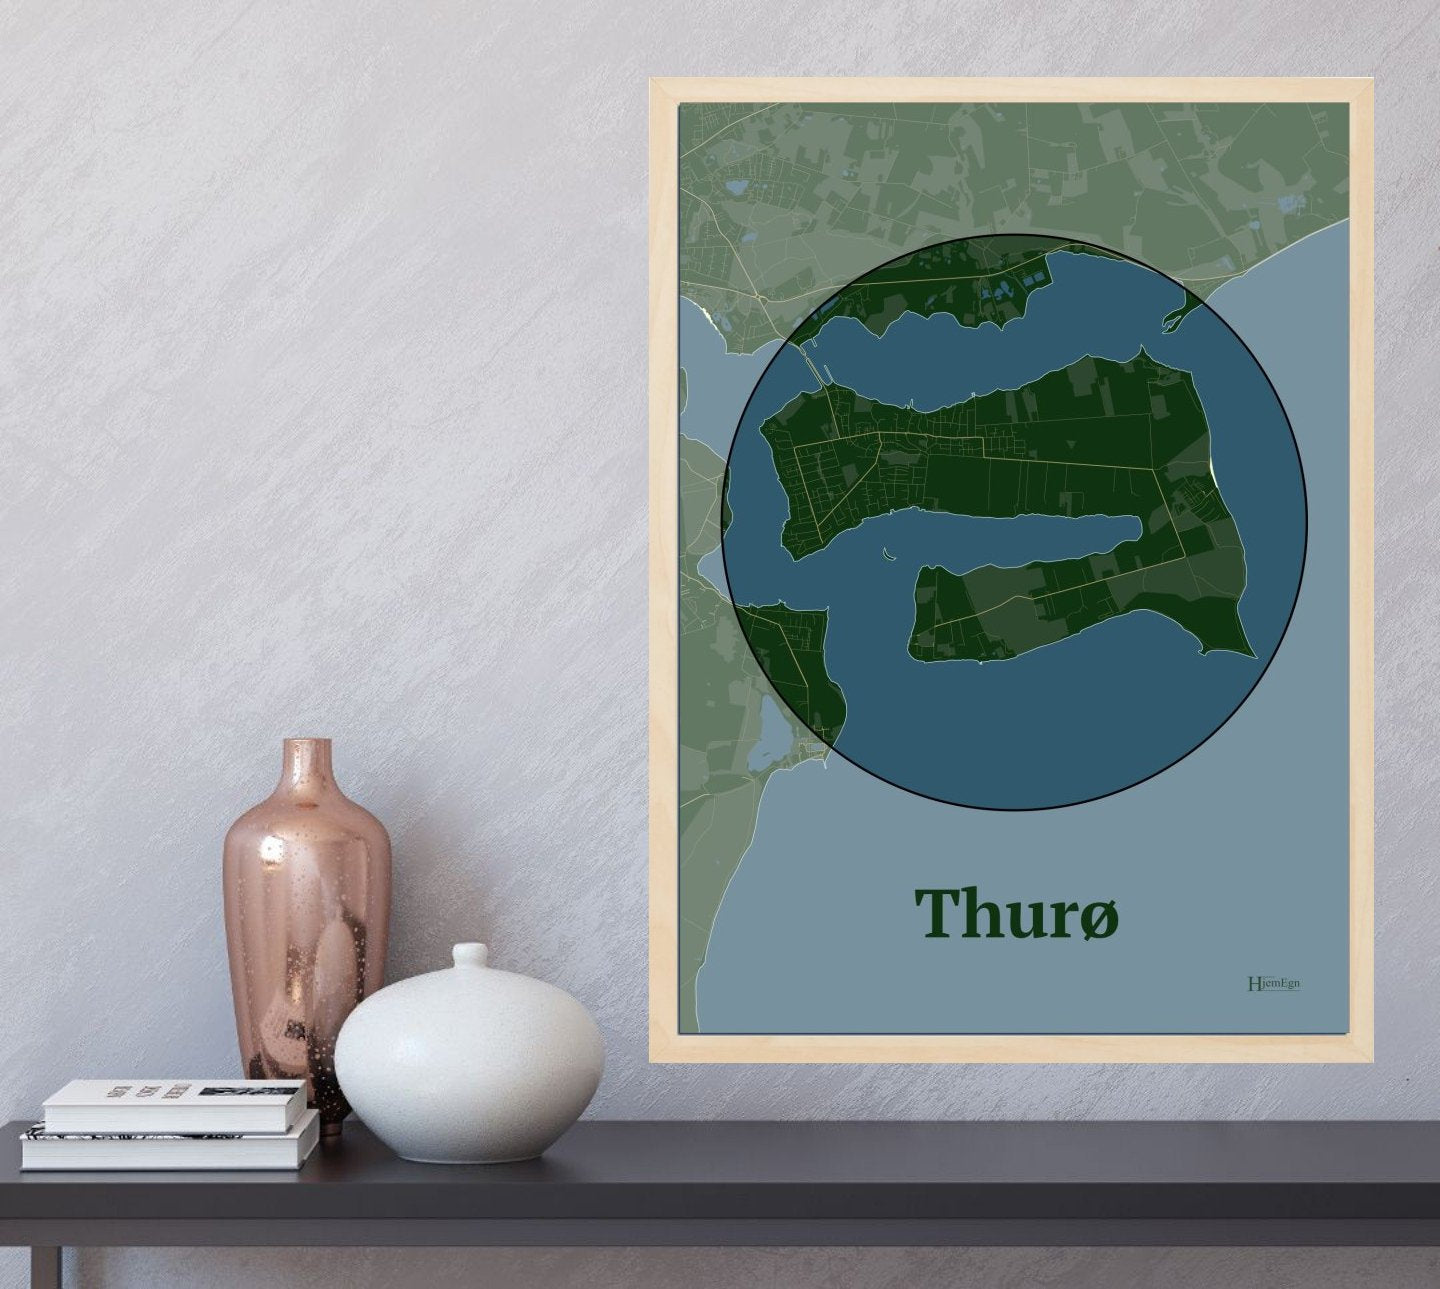 Thurø plakat i farve  og HjemEgn.dk design centrum. Design ø-kort for Thurø